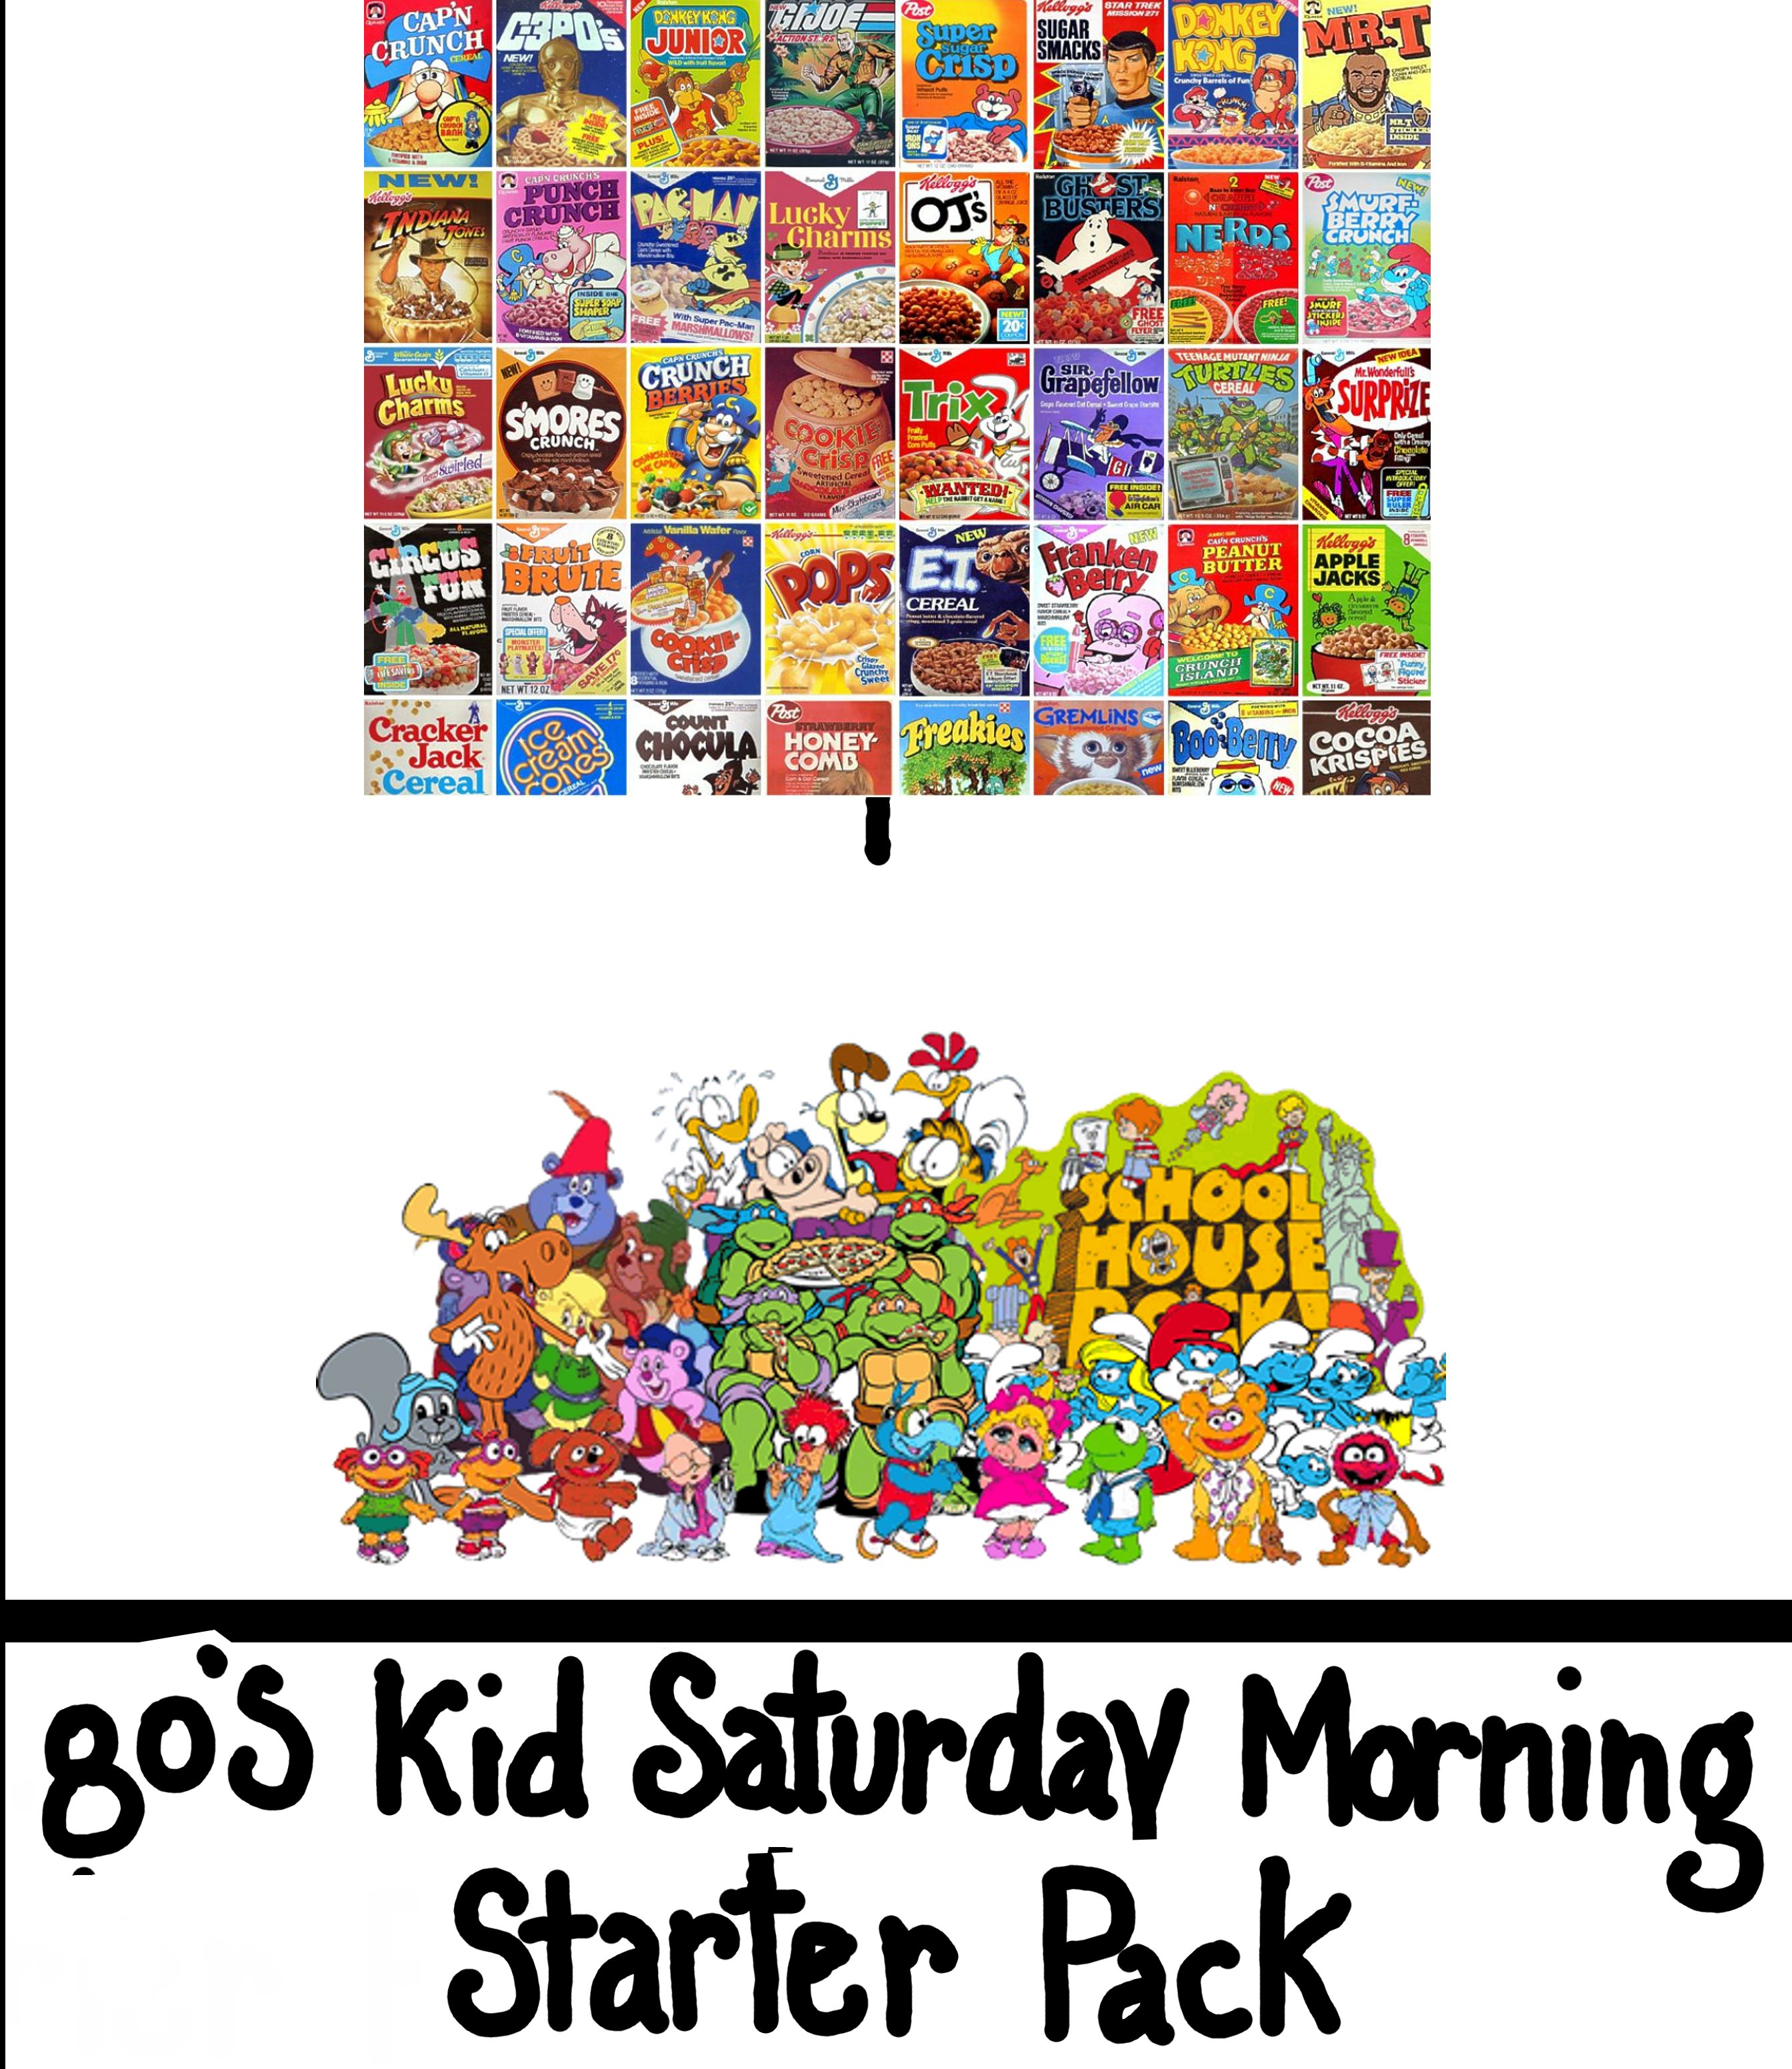 schoolhouse rock - 803 kid Saturday Morning Starter Pack 1